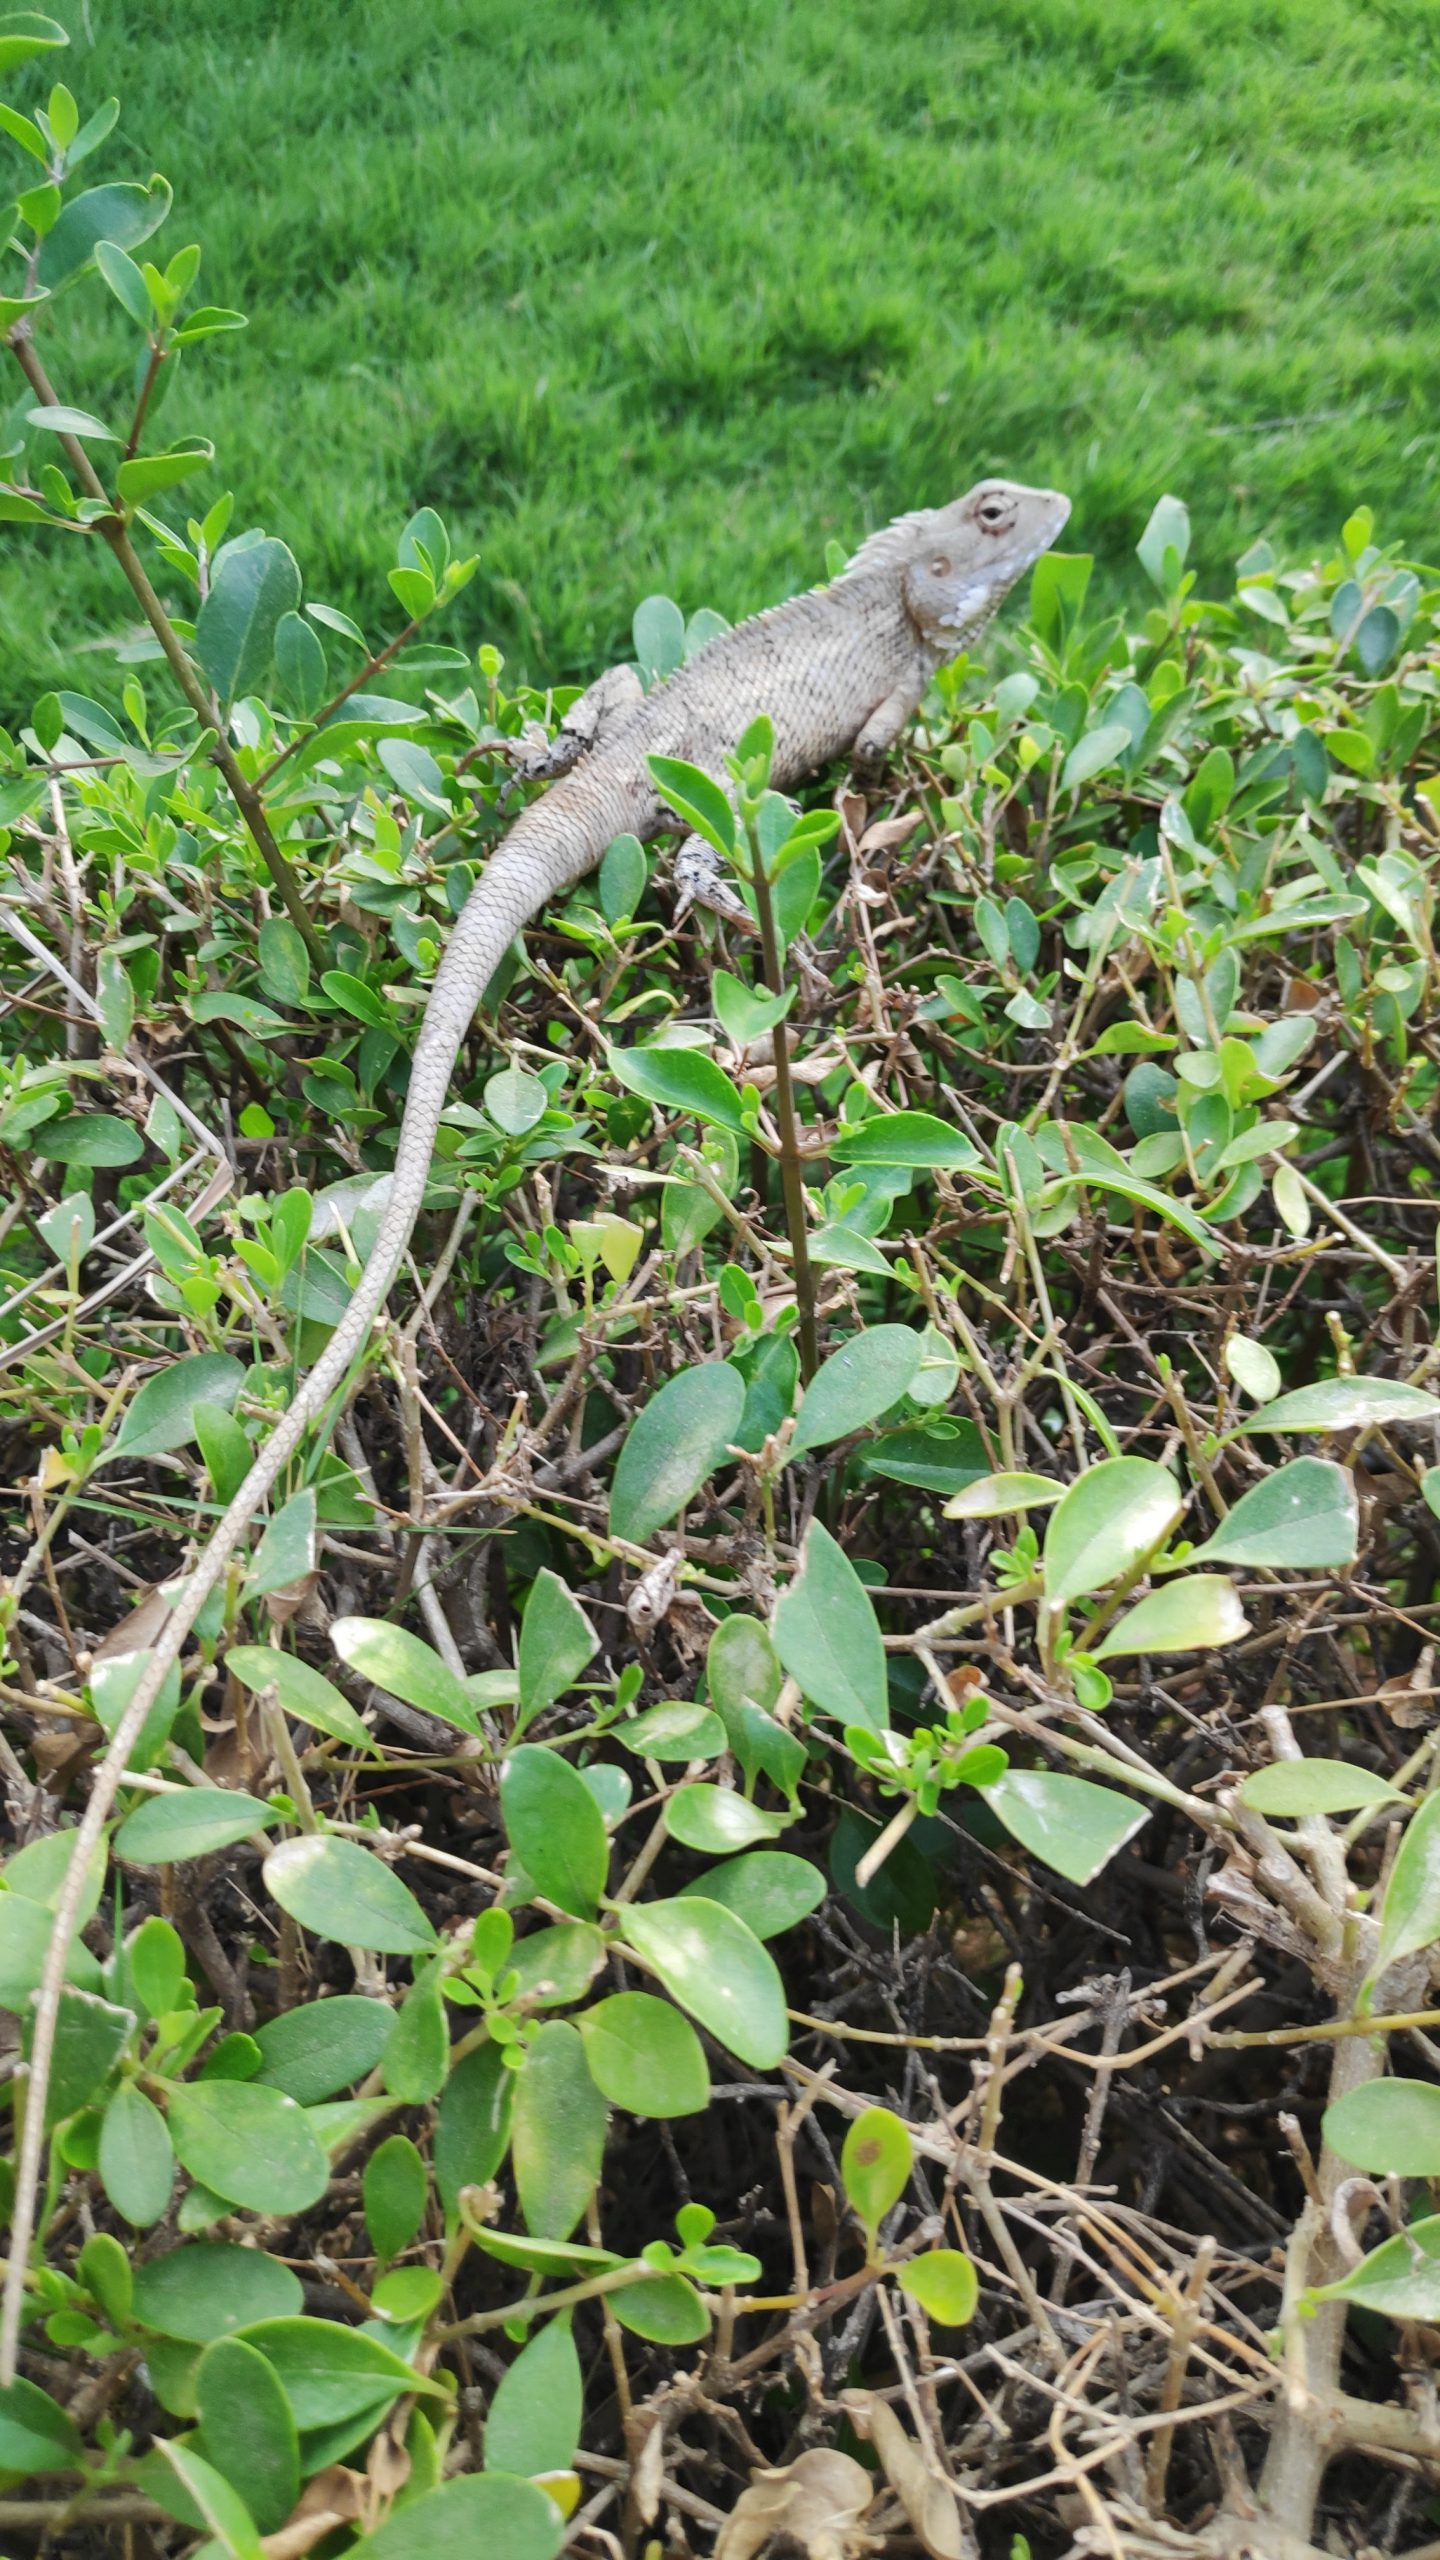 A lizard on bushes